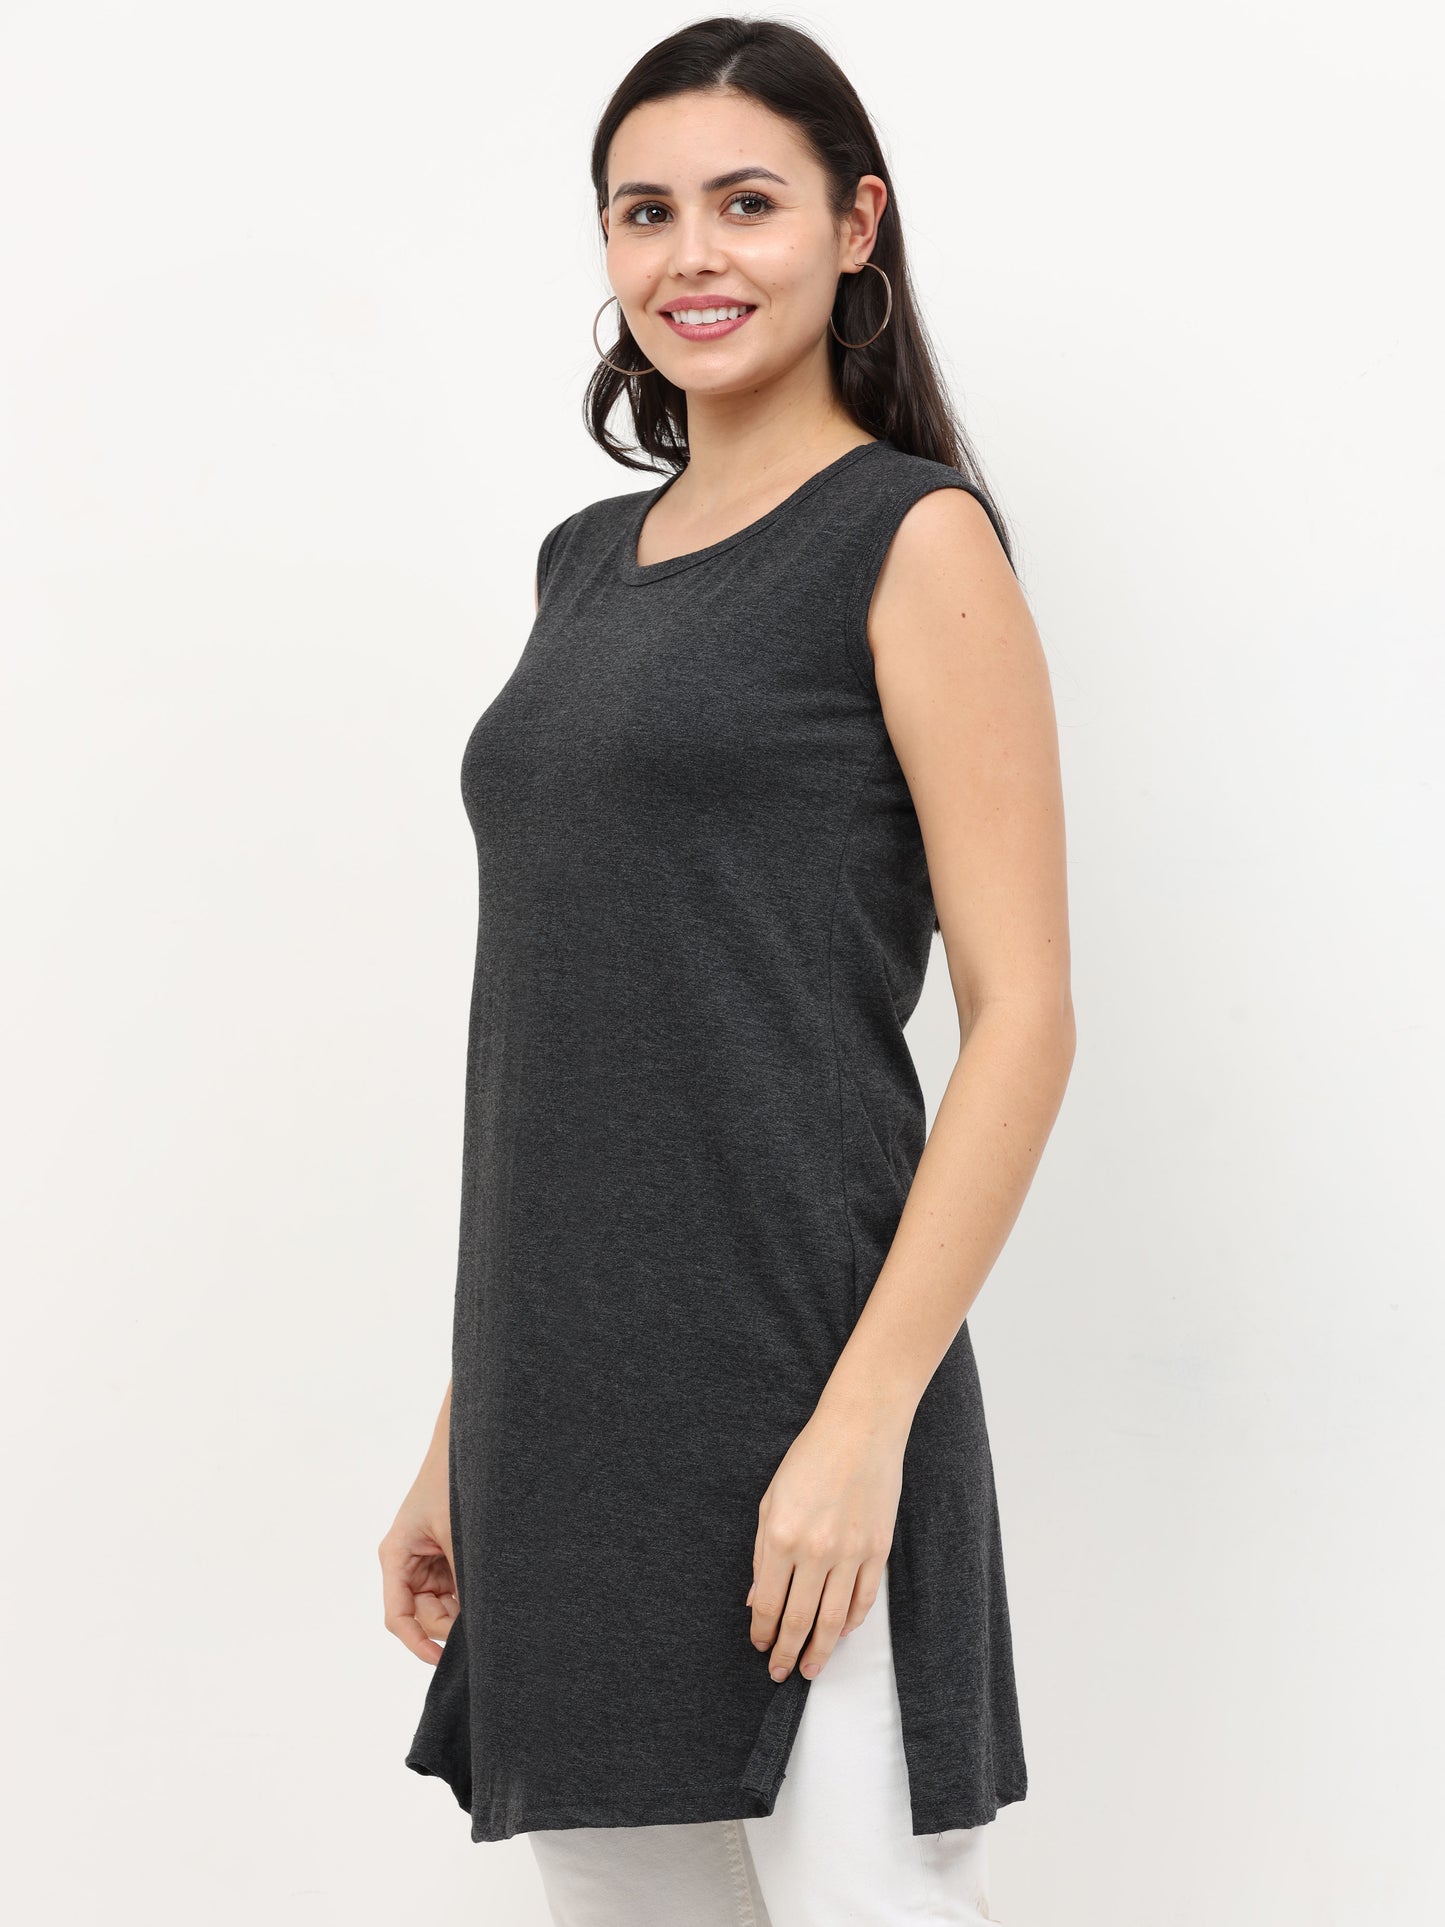 Women's Cotton Round Neck Plain Charcoal Melange Color Sleeveless Long Top